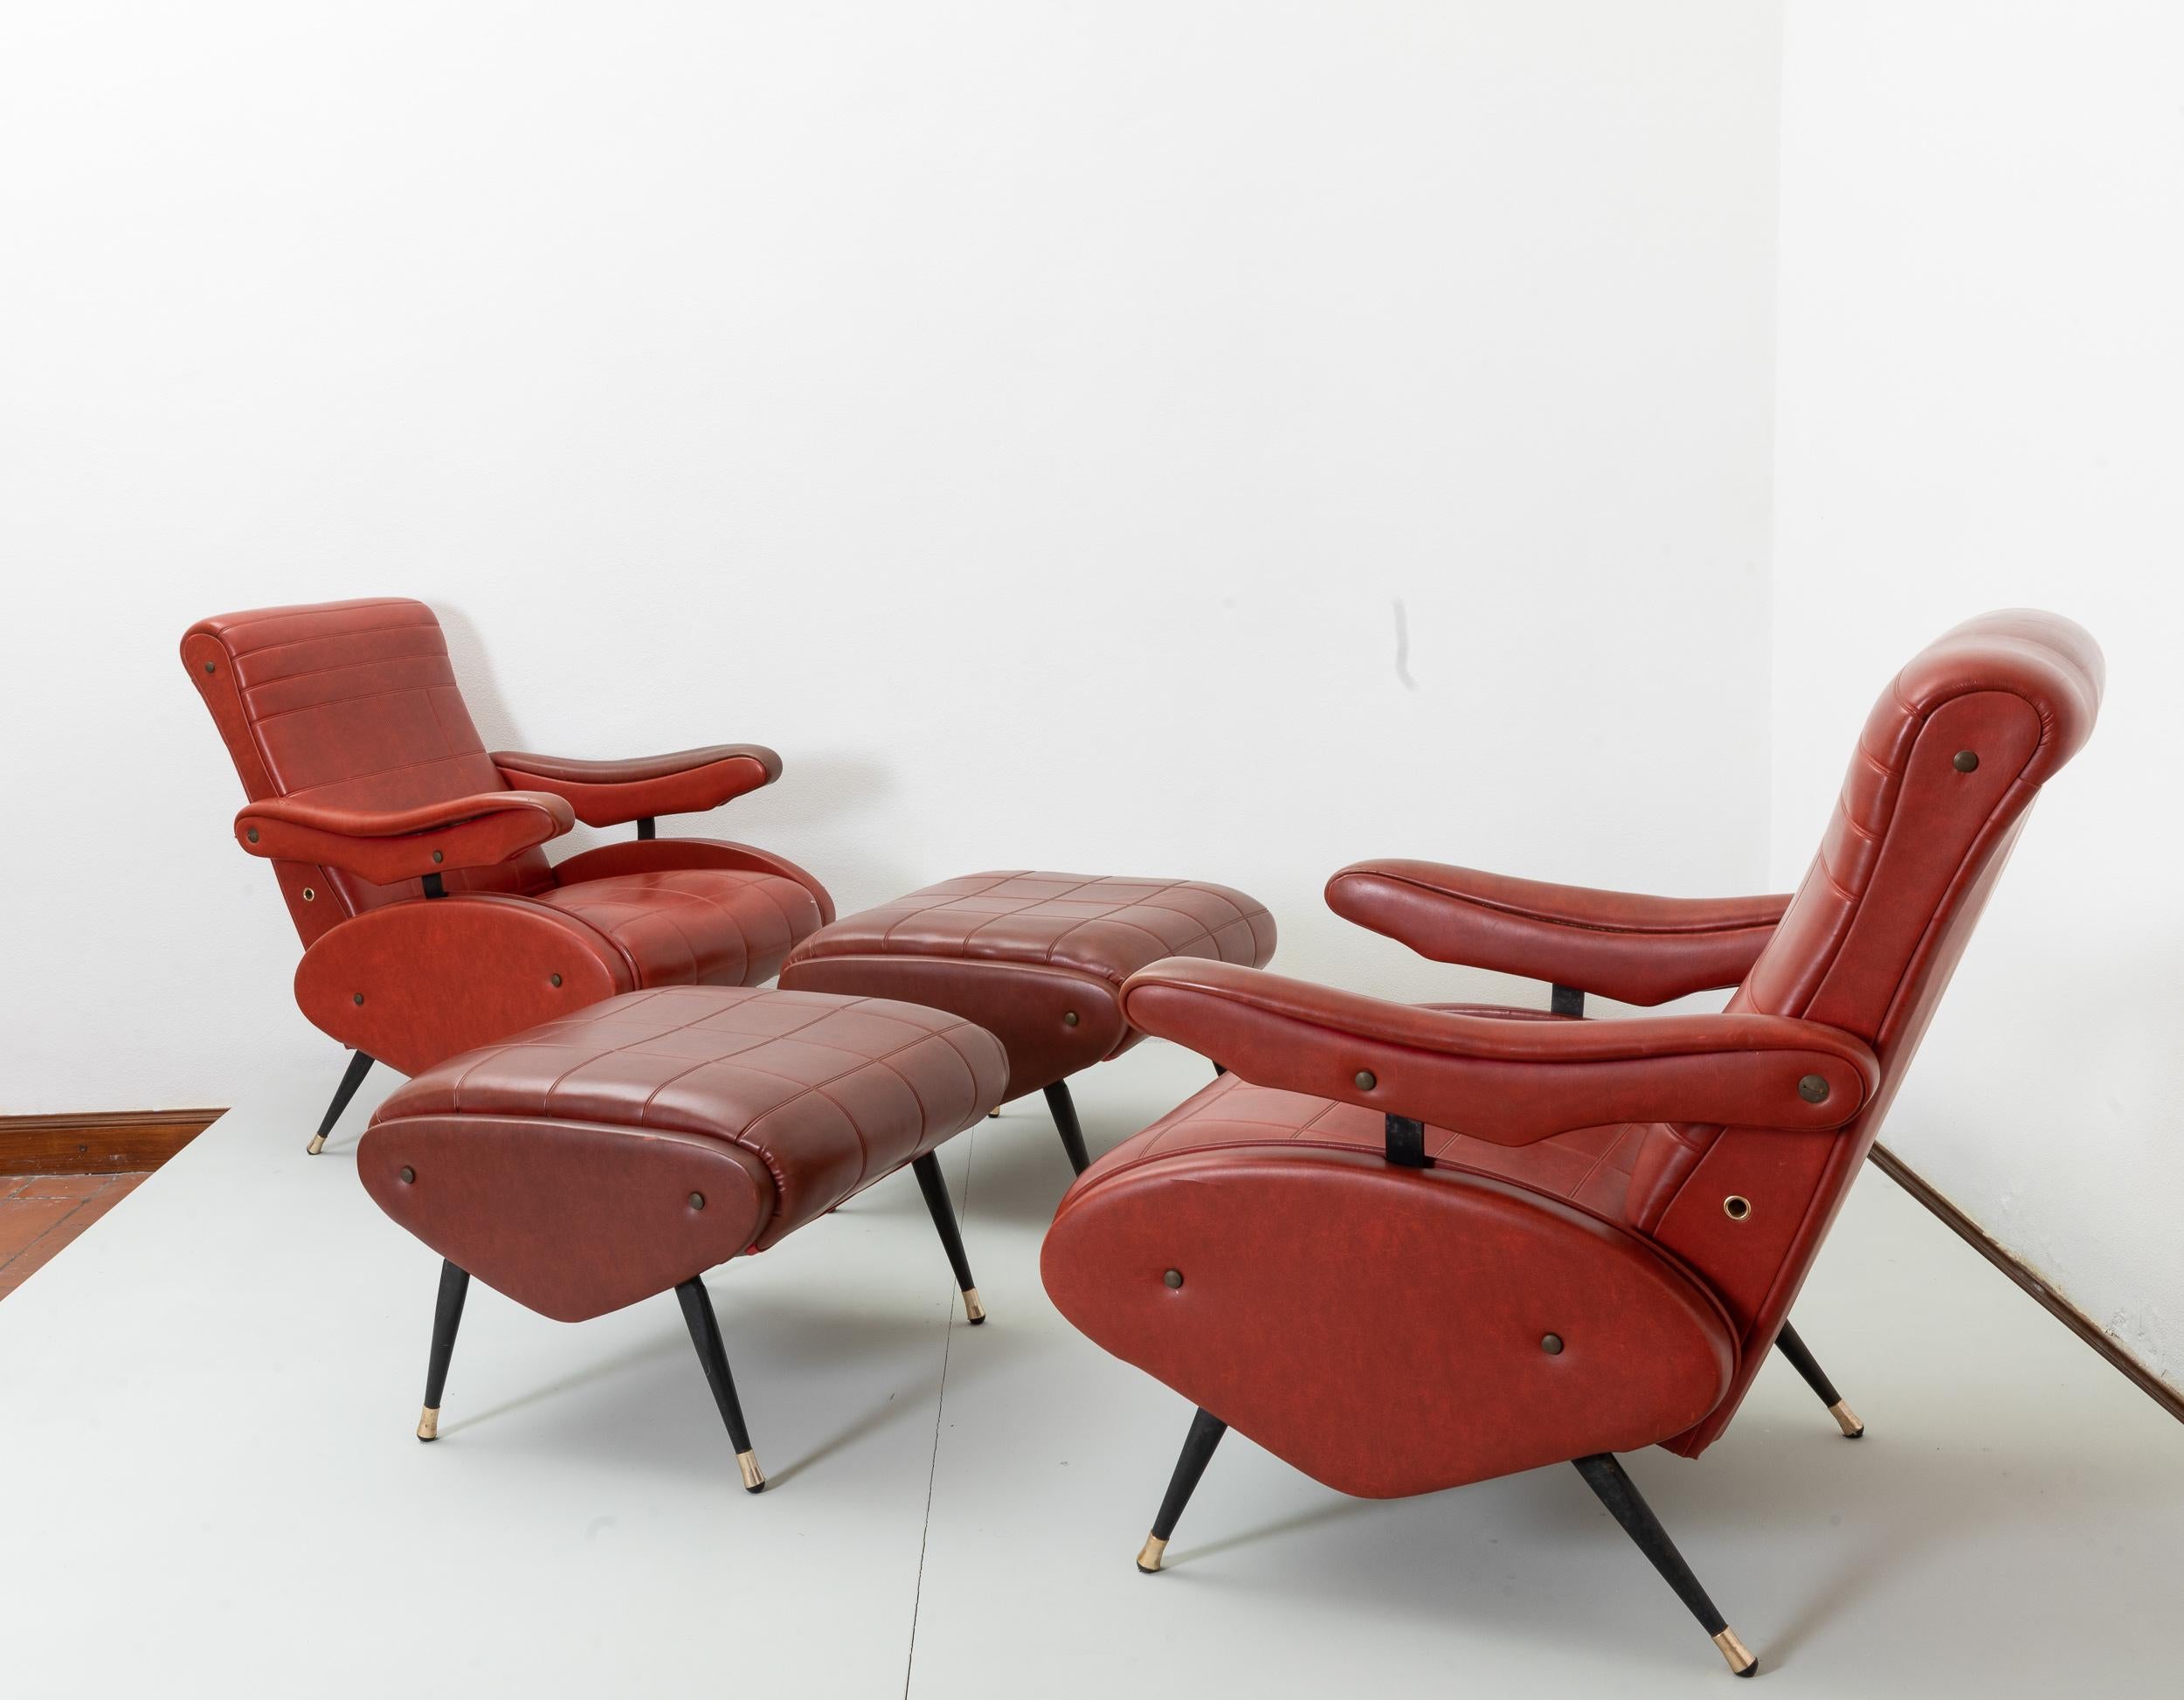 Nello Pini Prod. Novarredo c. 1950-1960 Two reclining armchairs and two pouffs 9